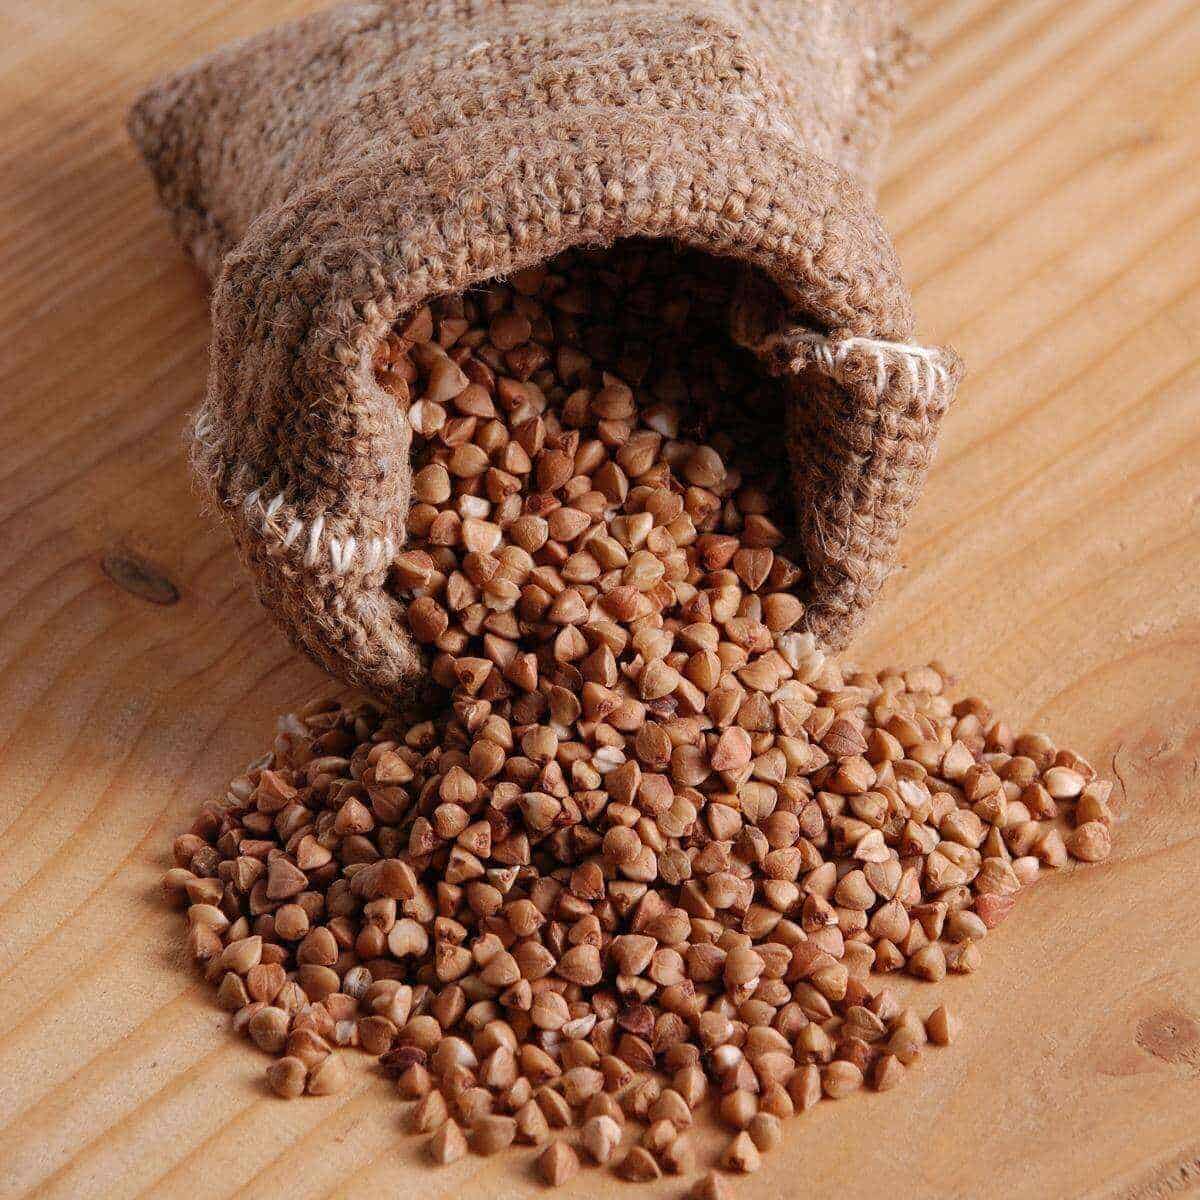 Is buck wheat gluten free? Buckwheat groats spilling out of a gunny sack.